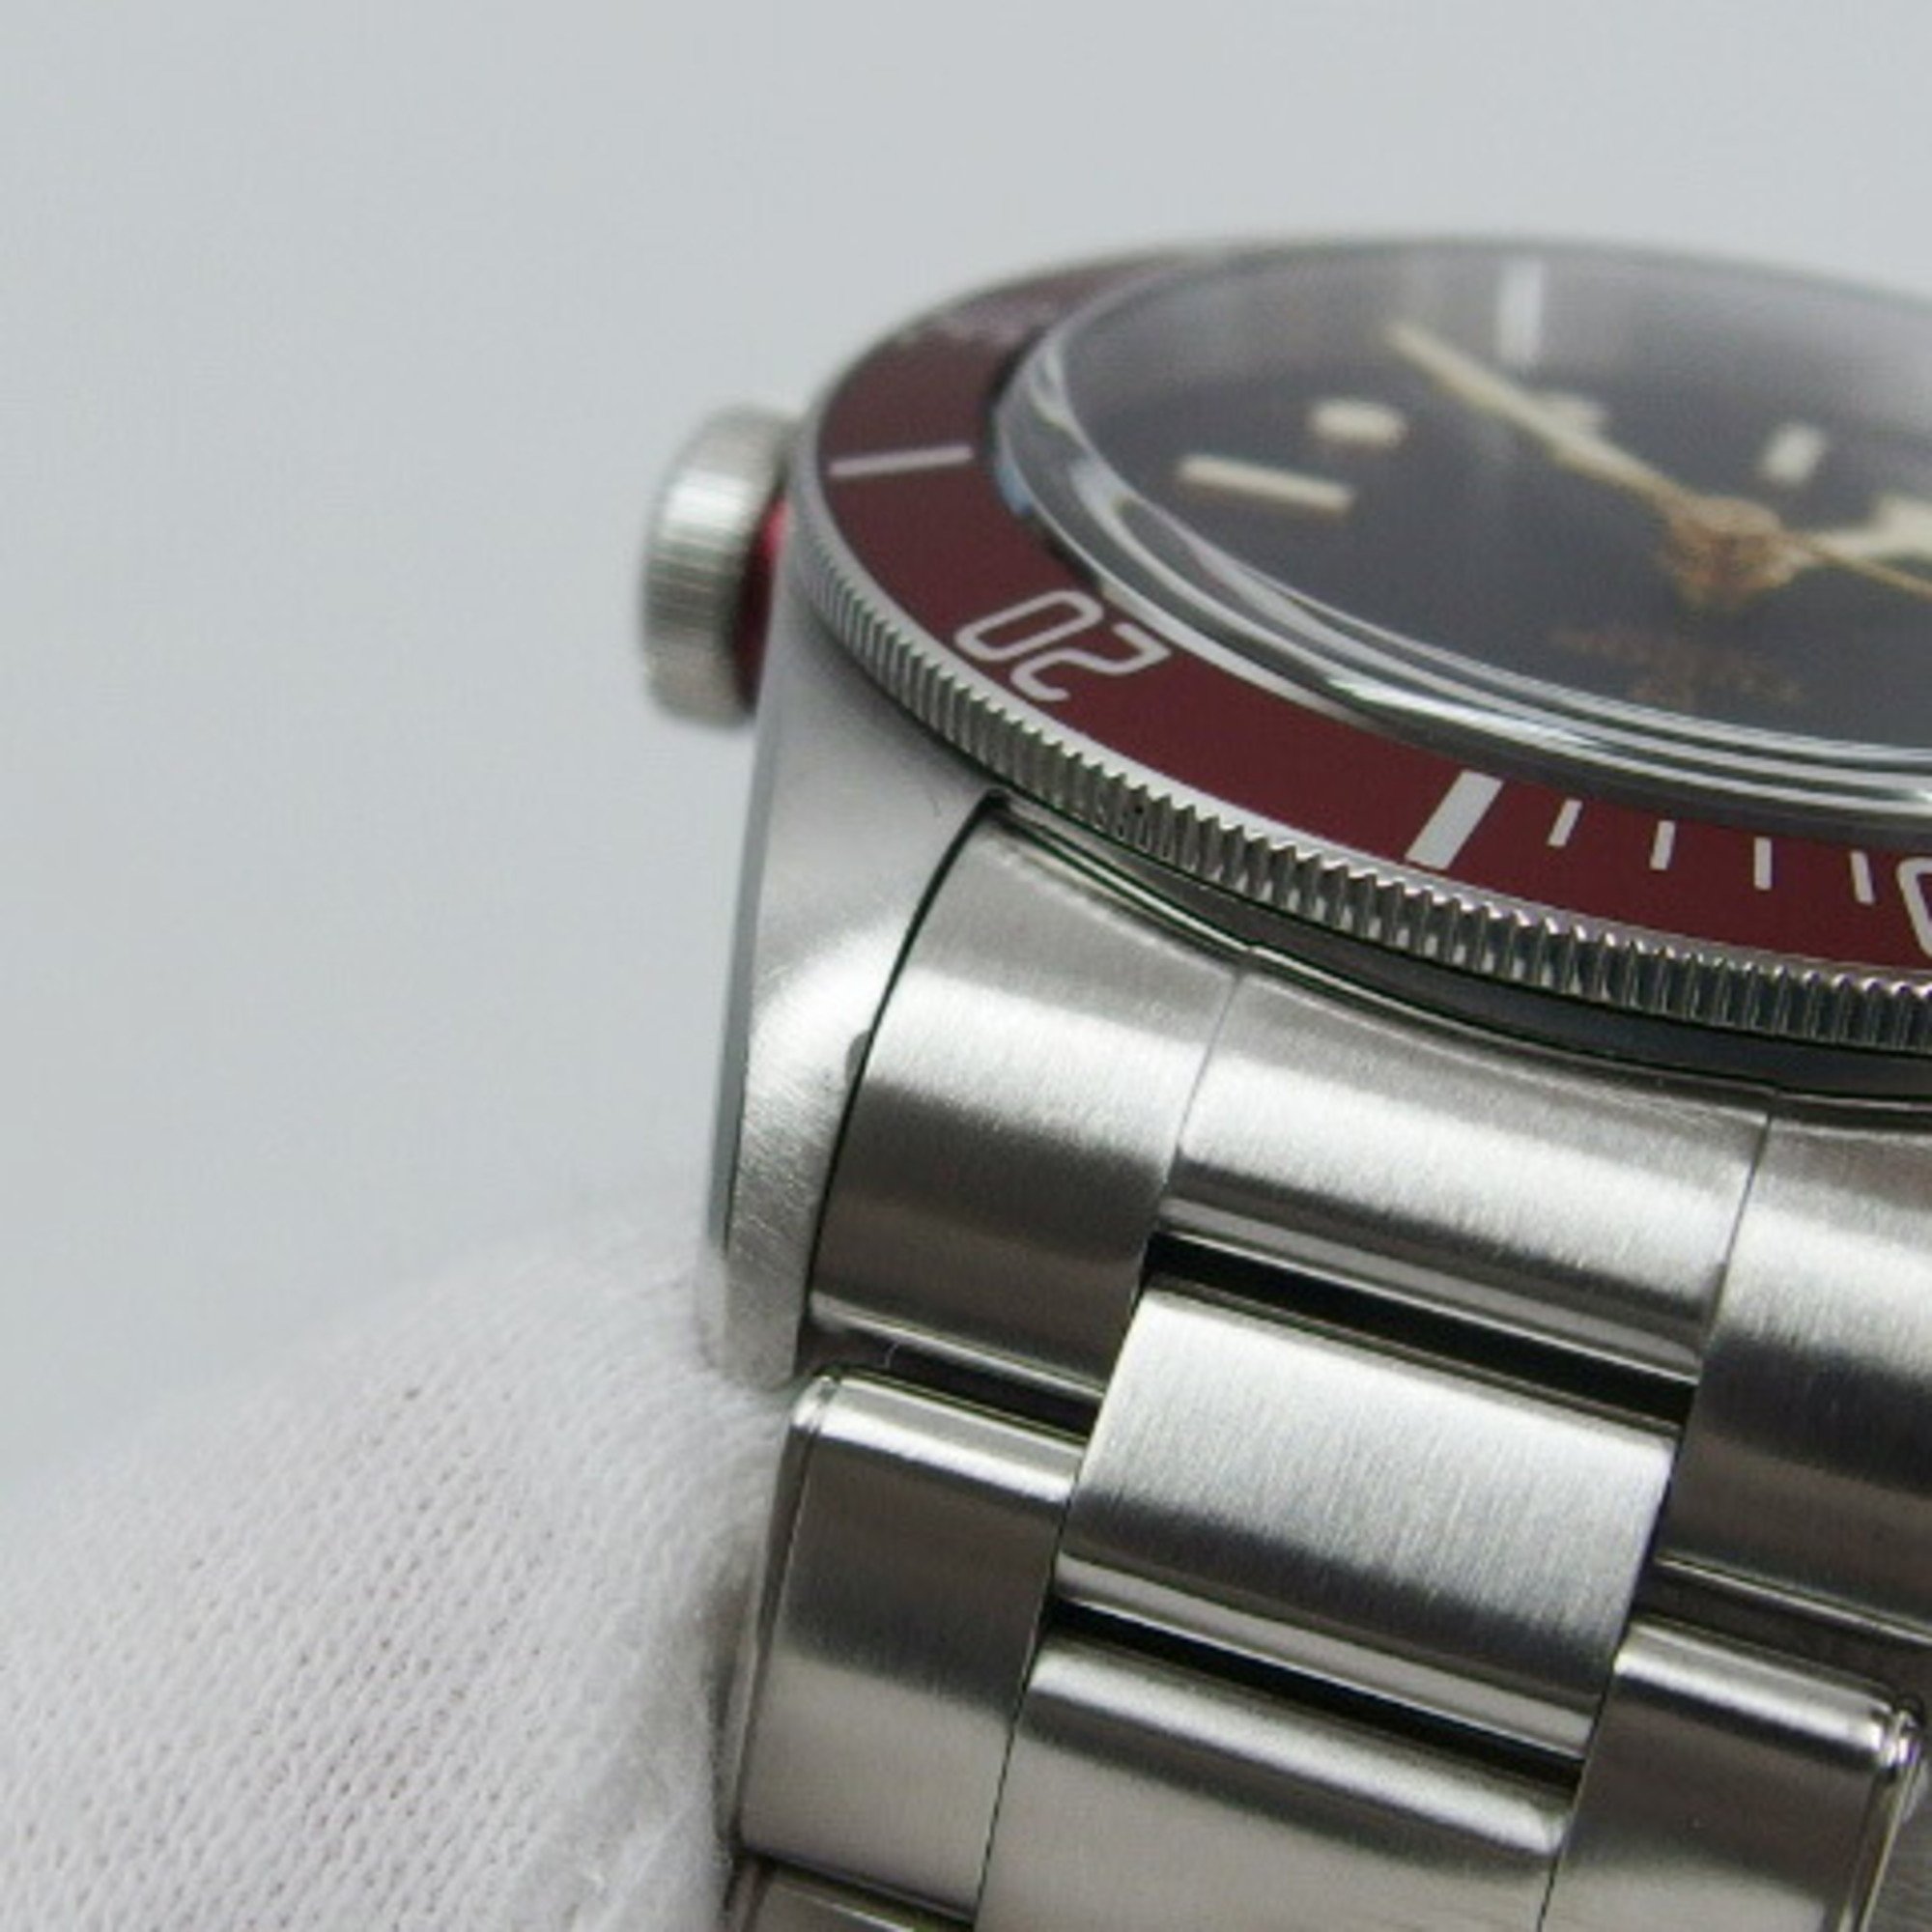 Tudor Heritage Black Bay 79230R black dial men's watch wristwatch